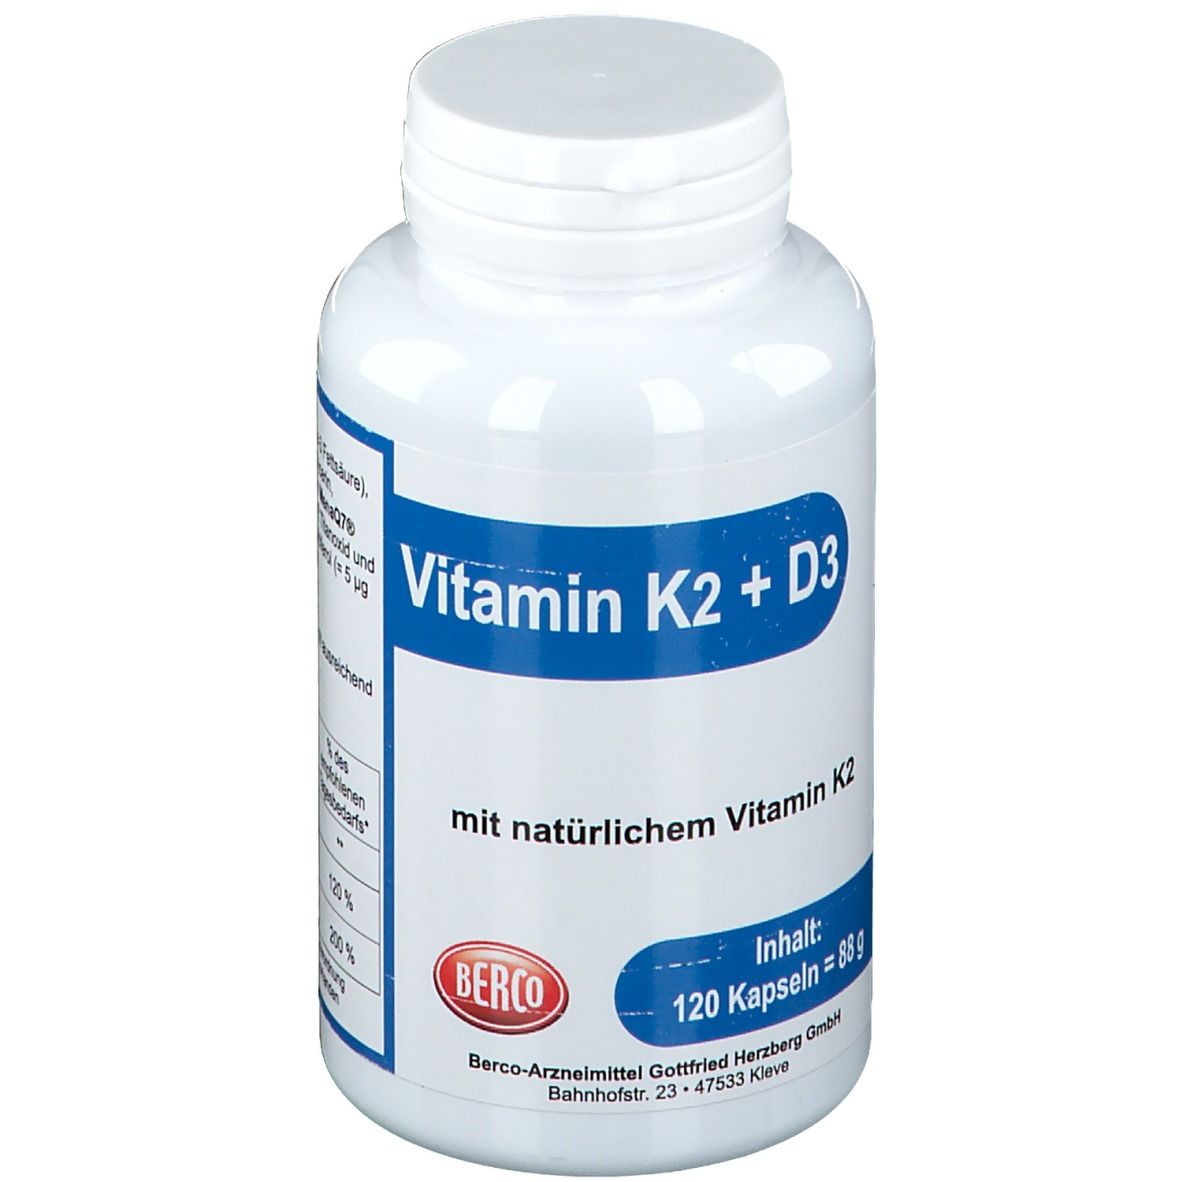 Vitamine K2 + D3 Berco